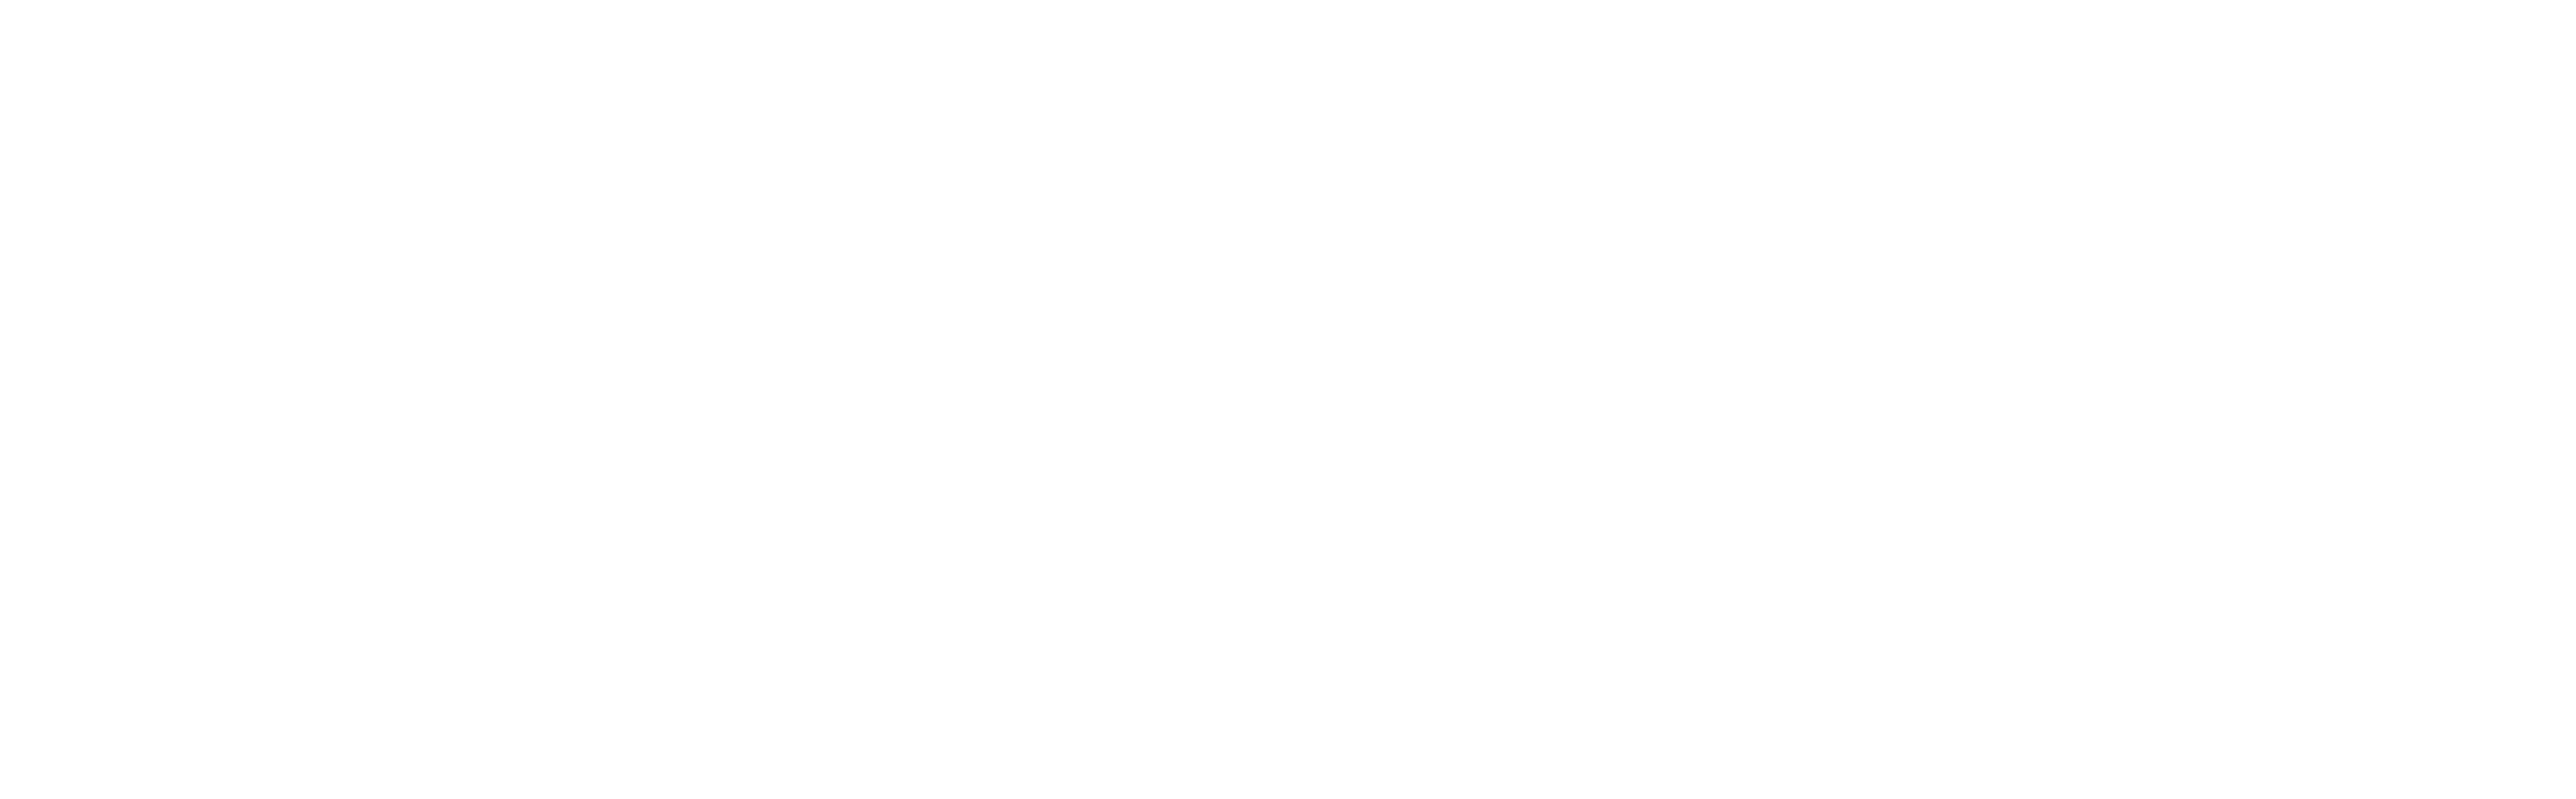 Cineshine logo